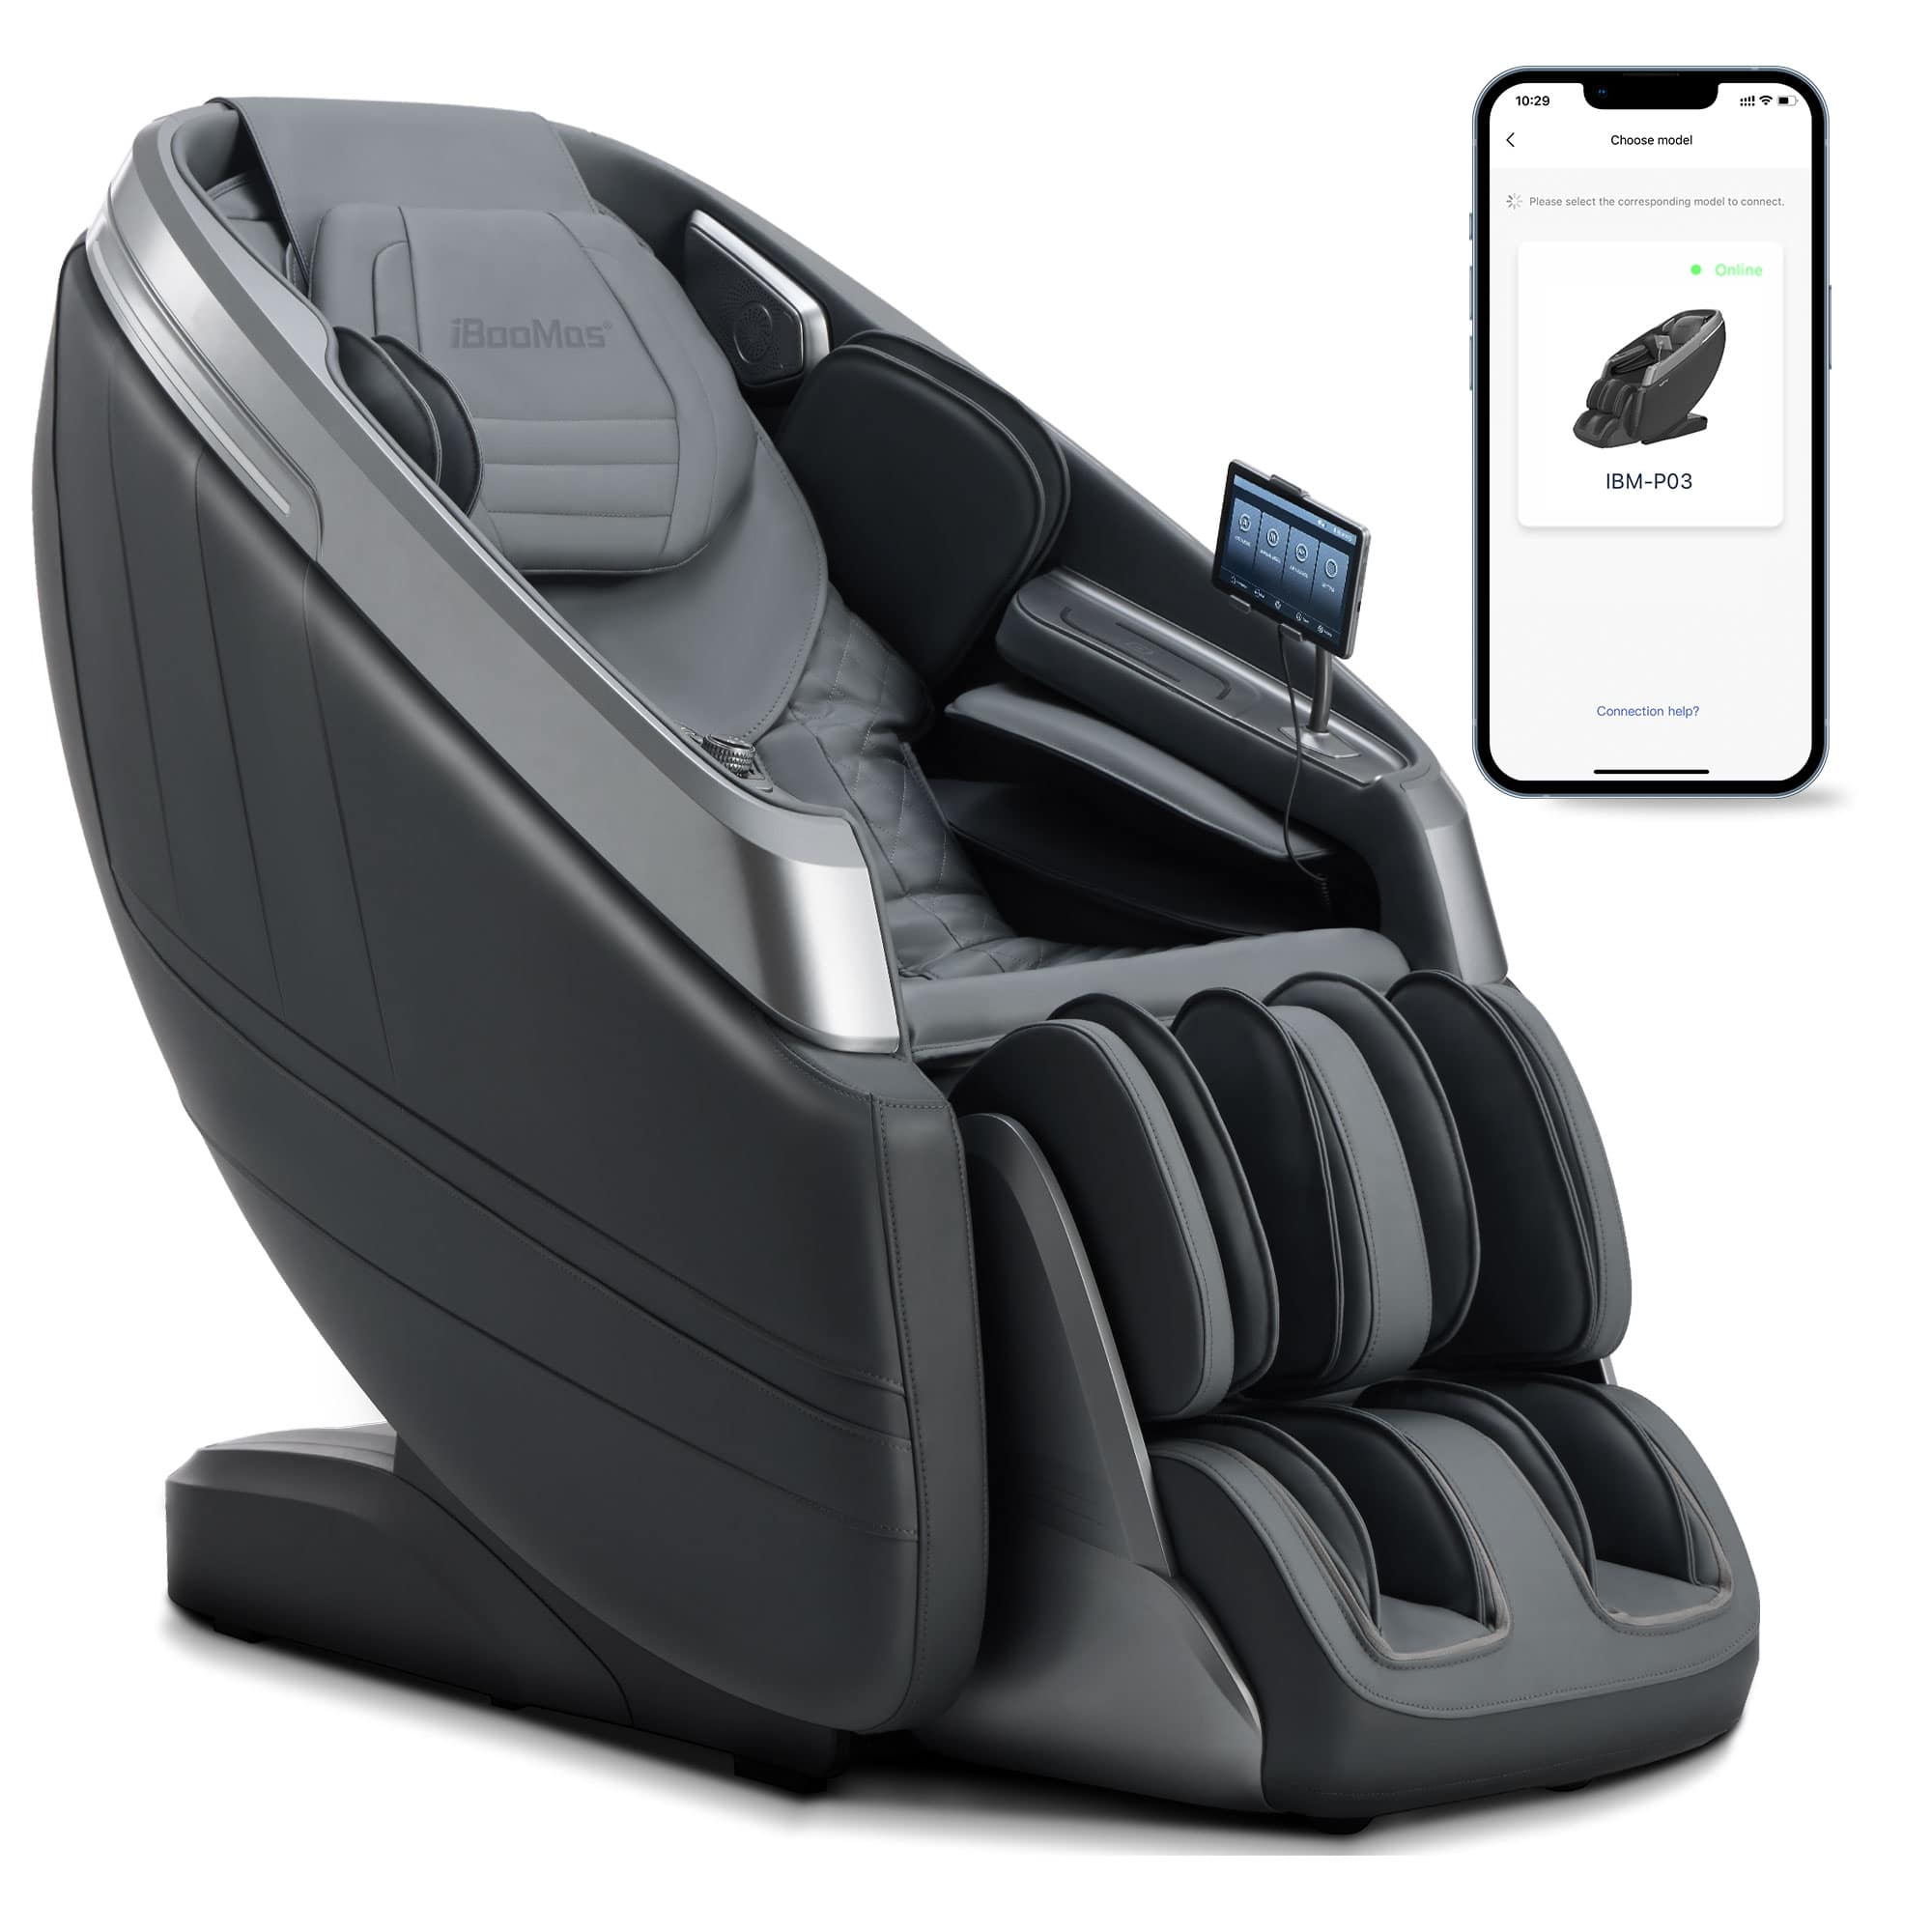 Cockpit-like 4D Hyper Tech Therapeutic Massage Chair - Under $3000 